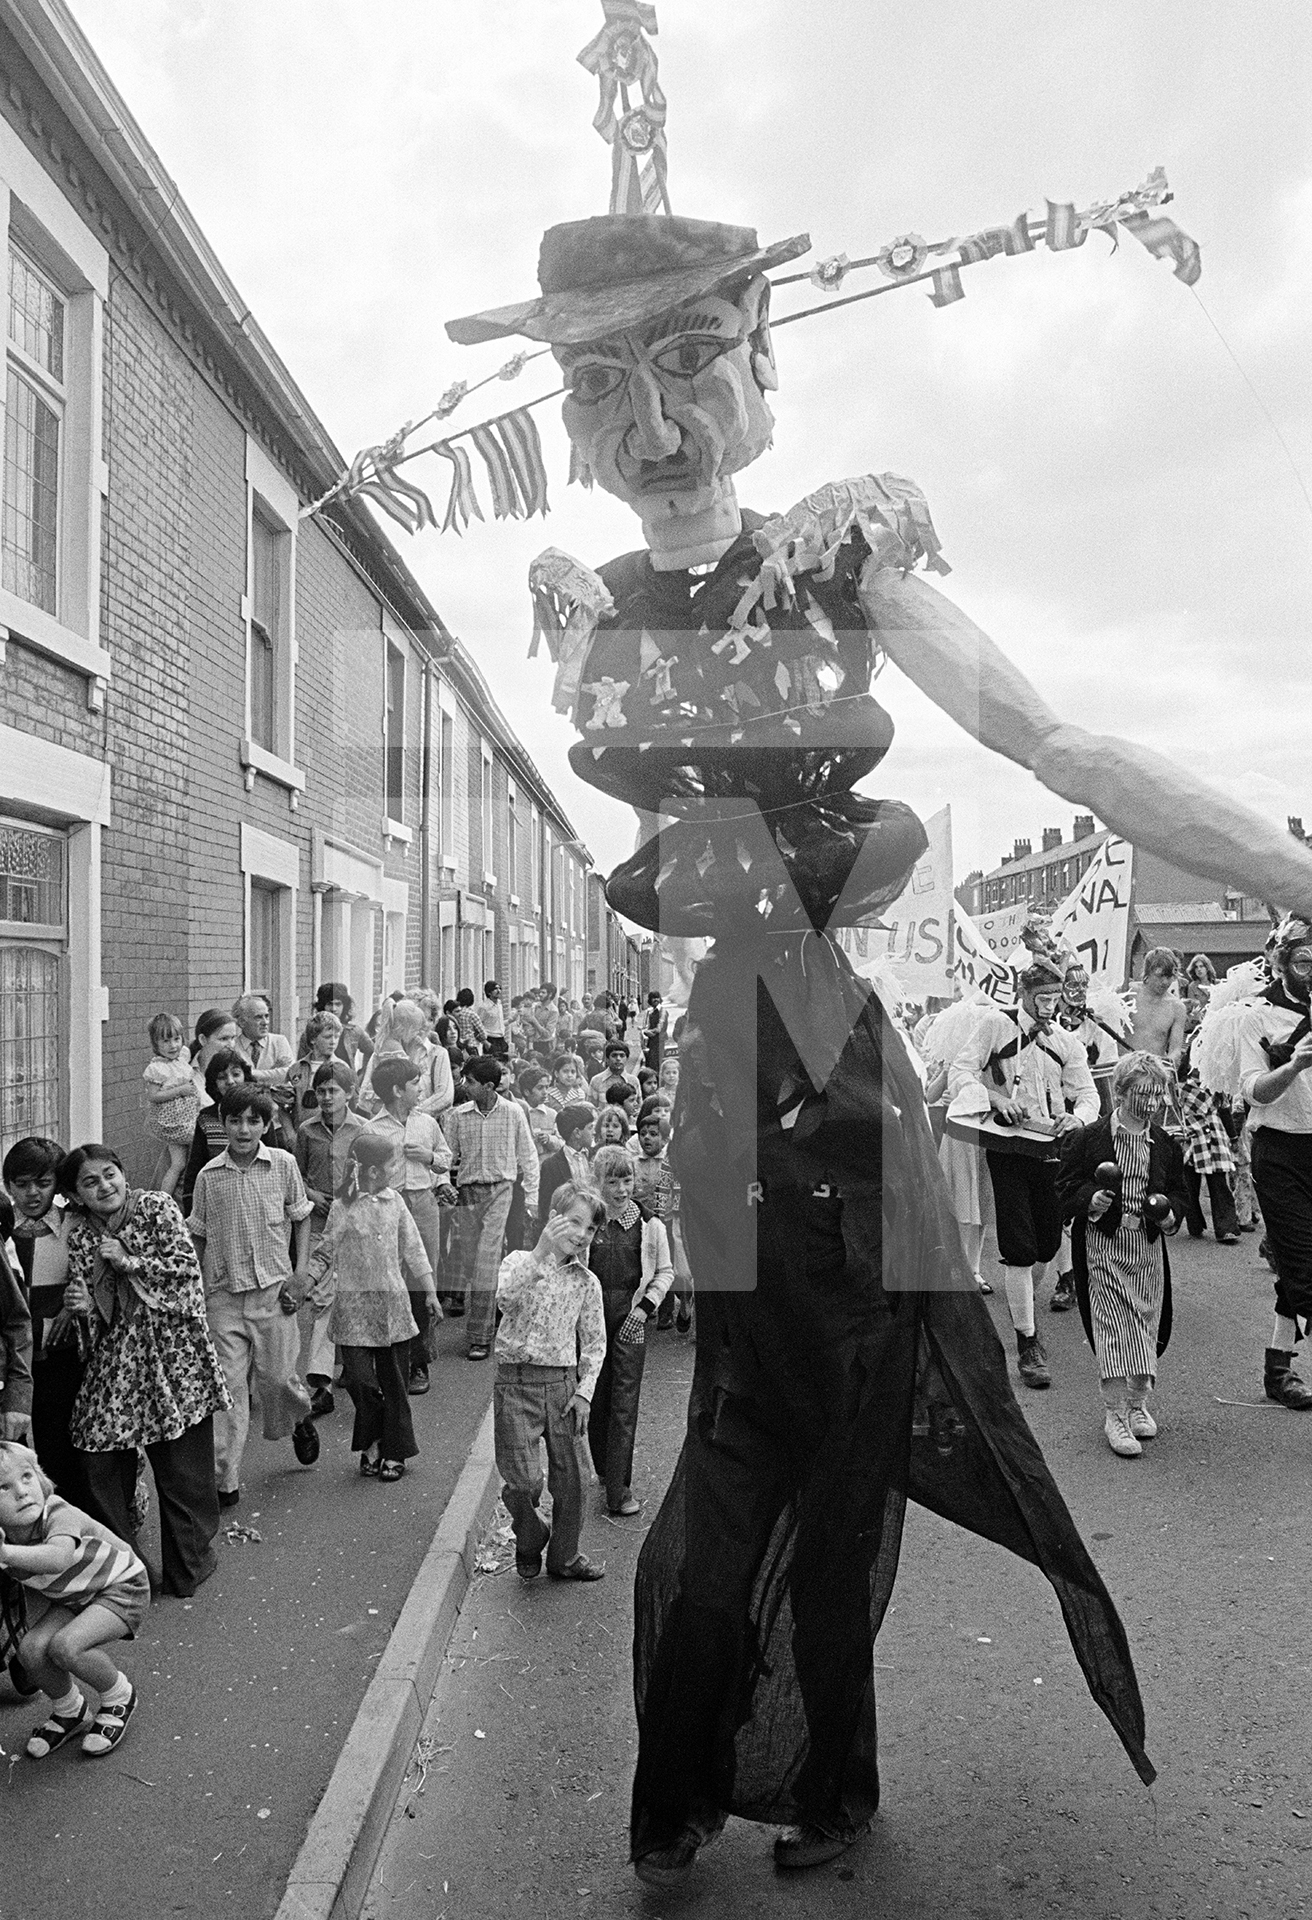 Brookhouse Summer Festival, Blackburn, Lancashire. August 1977 by Daniel Meadows